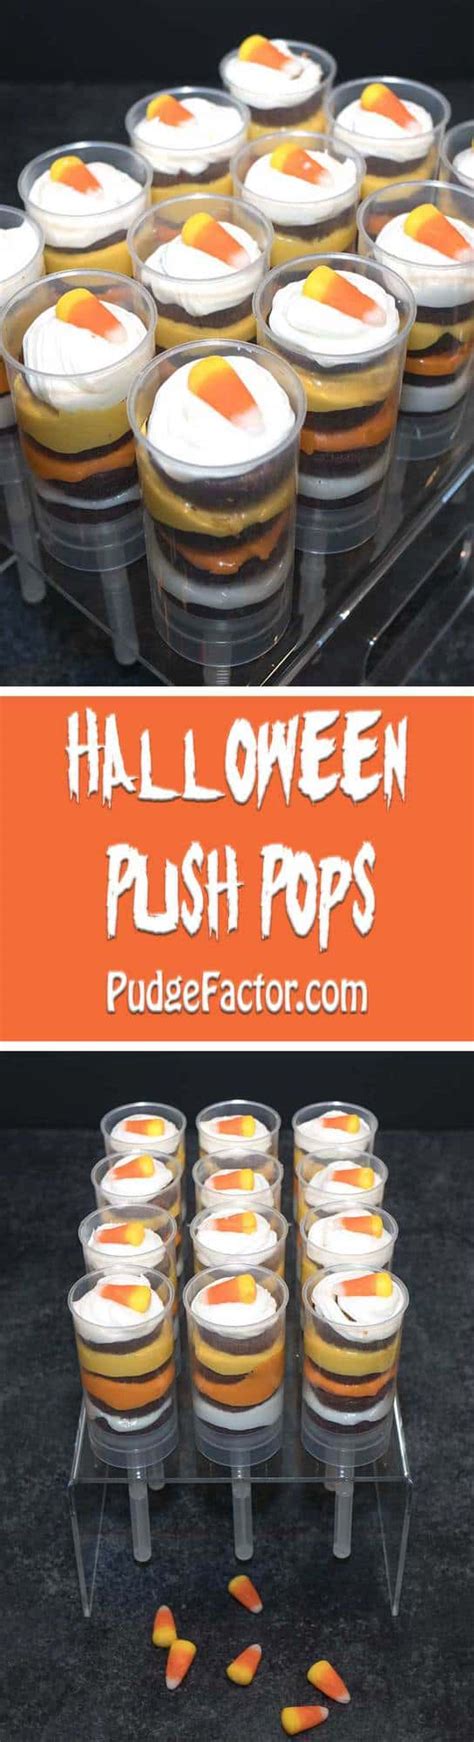 Halloween Push Pops The Pudge Factor